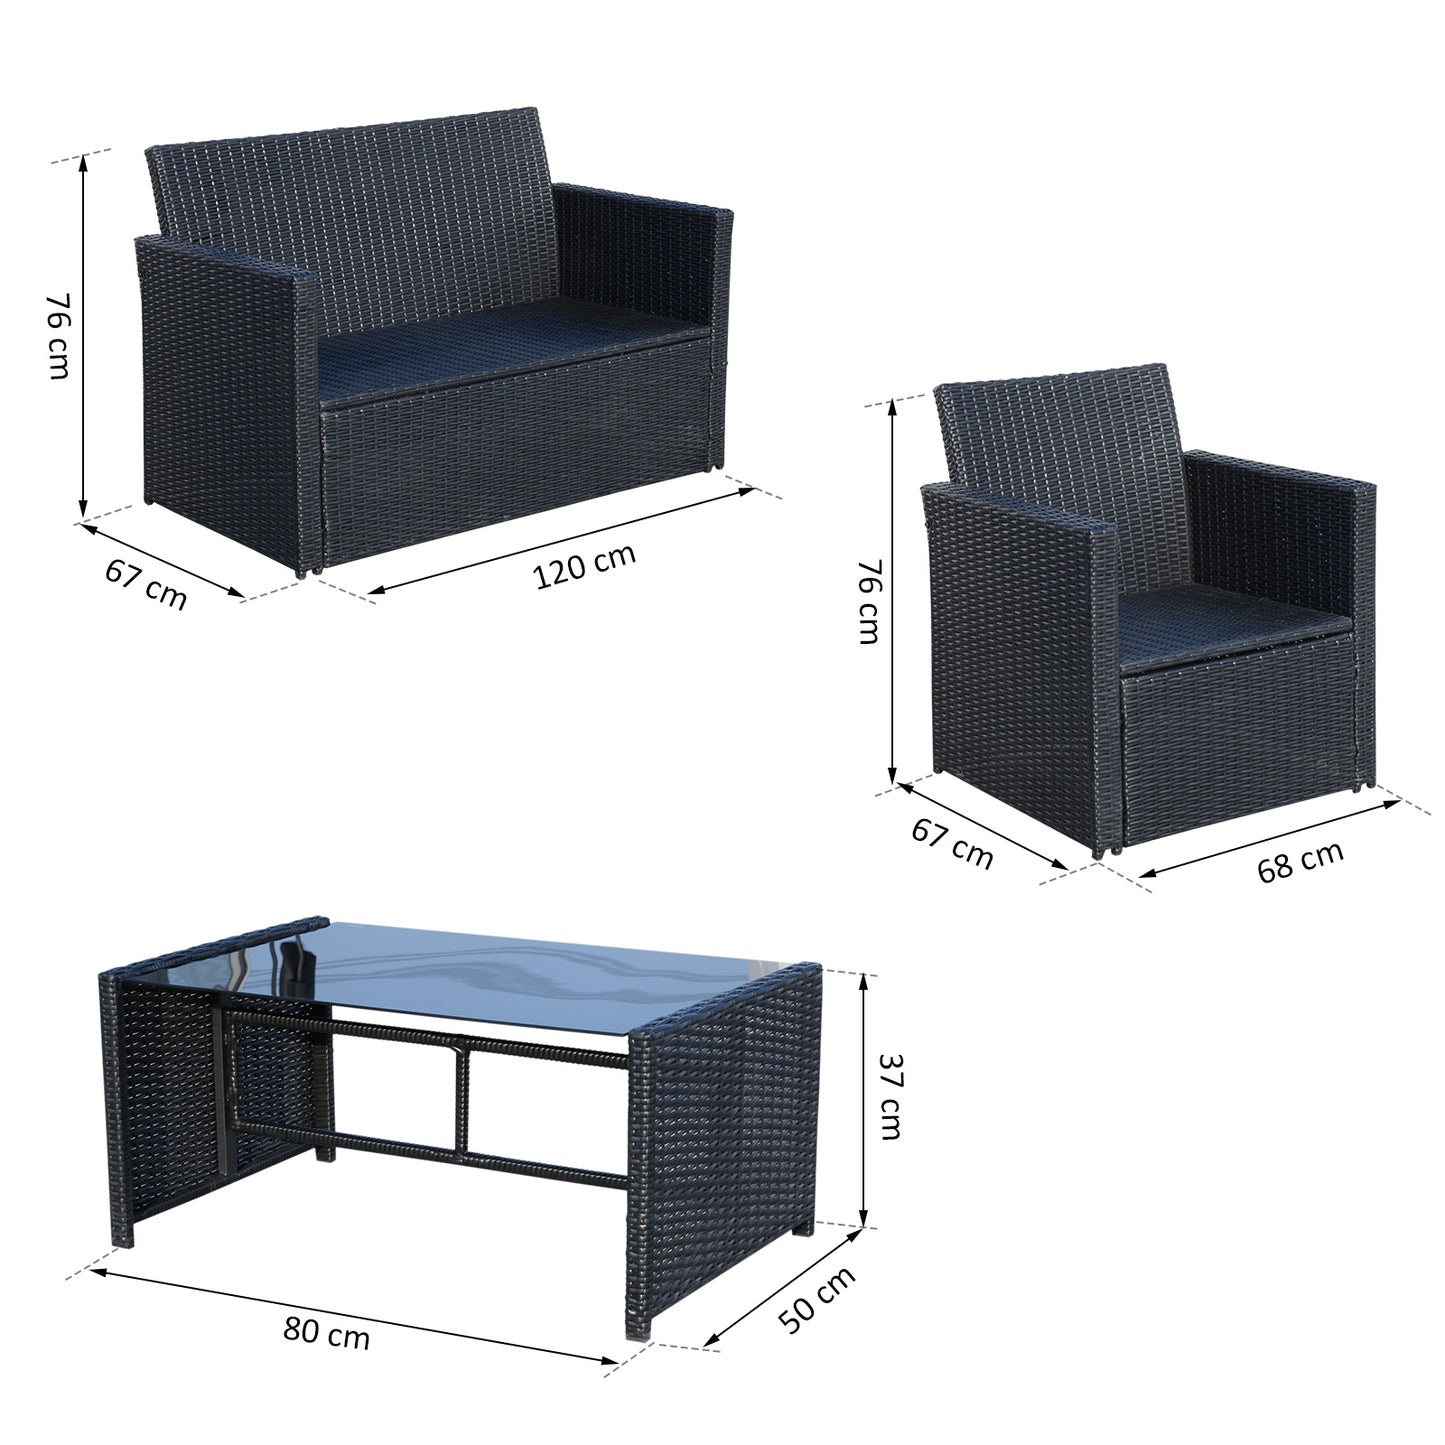 Outsunny 4-Seater Outdoor Garden PE Rattan Sofa Set w/ Coffee Table Black